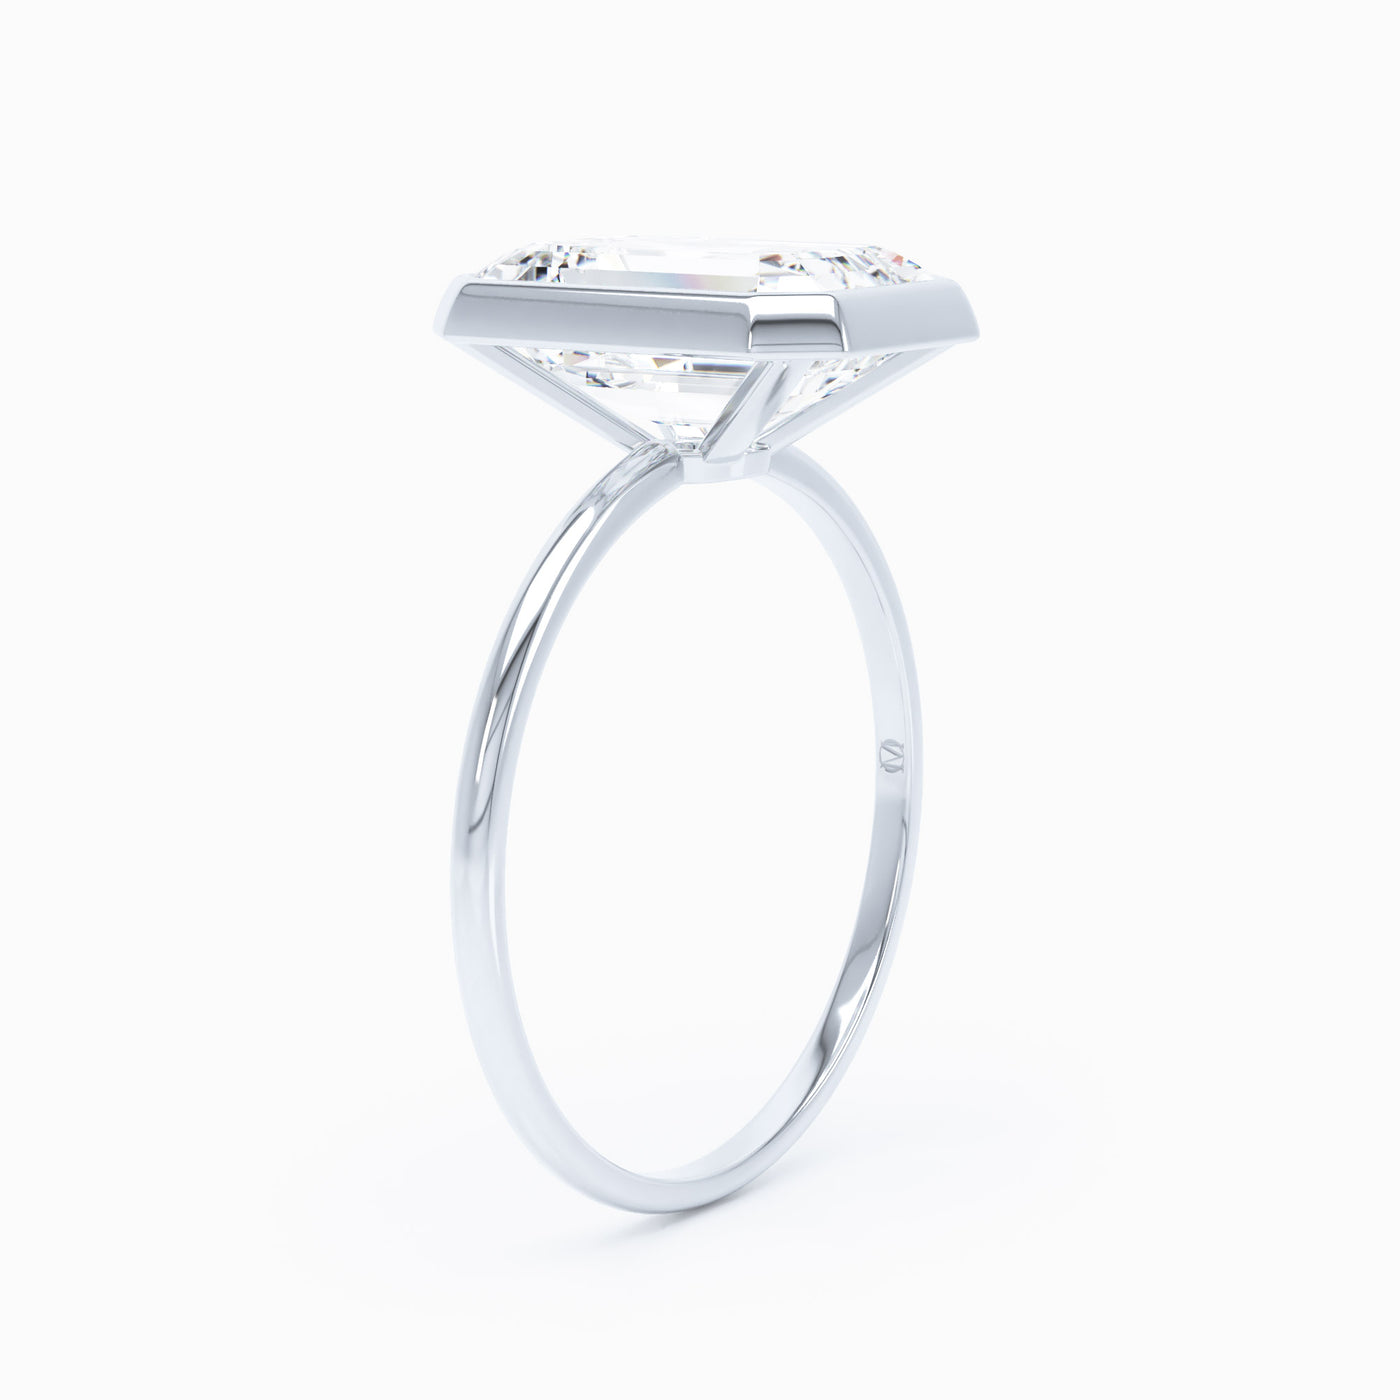 Bezel Set North South Emerald Cut Engagement Ring